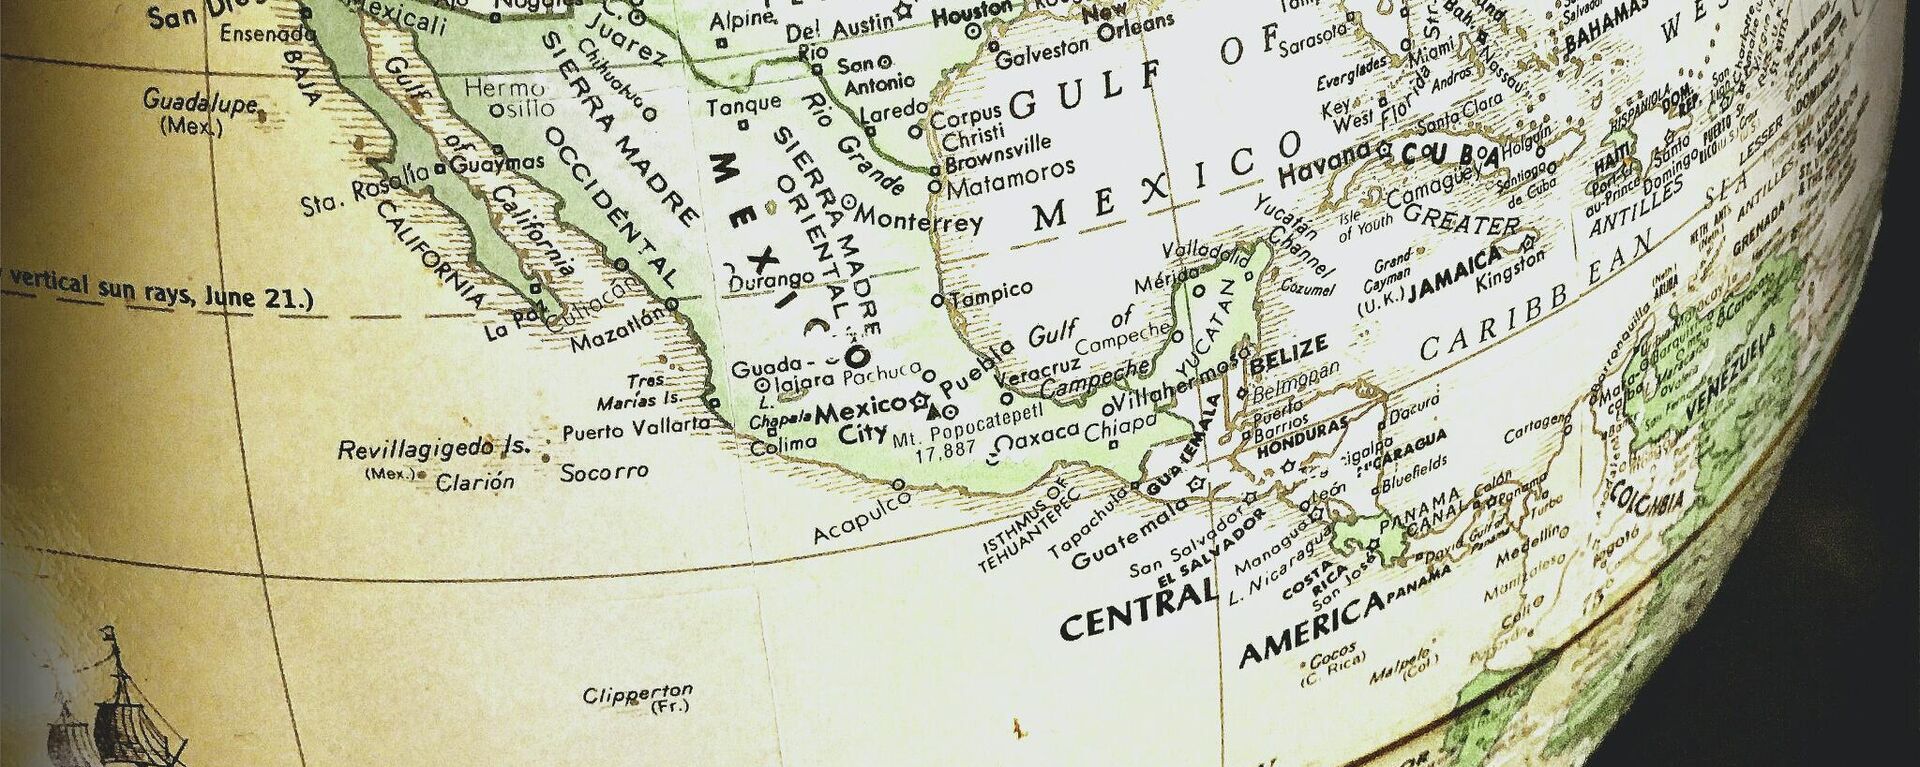 Mapa de Centroamérica - Sputnik Mundo, 1920, 29.07.2021